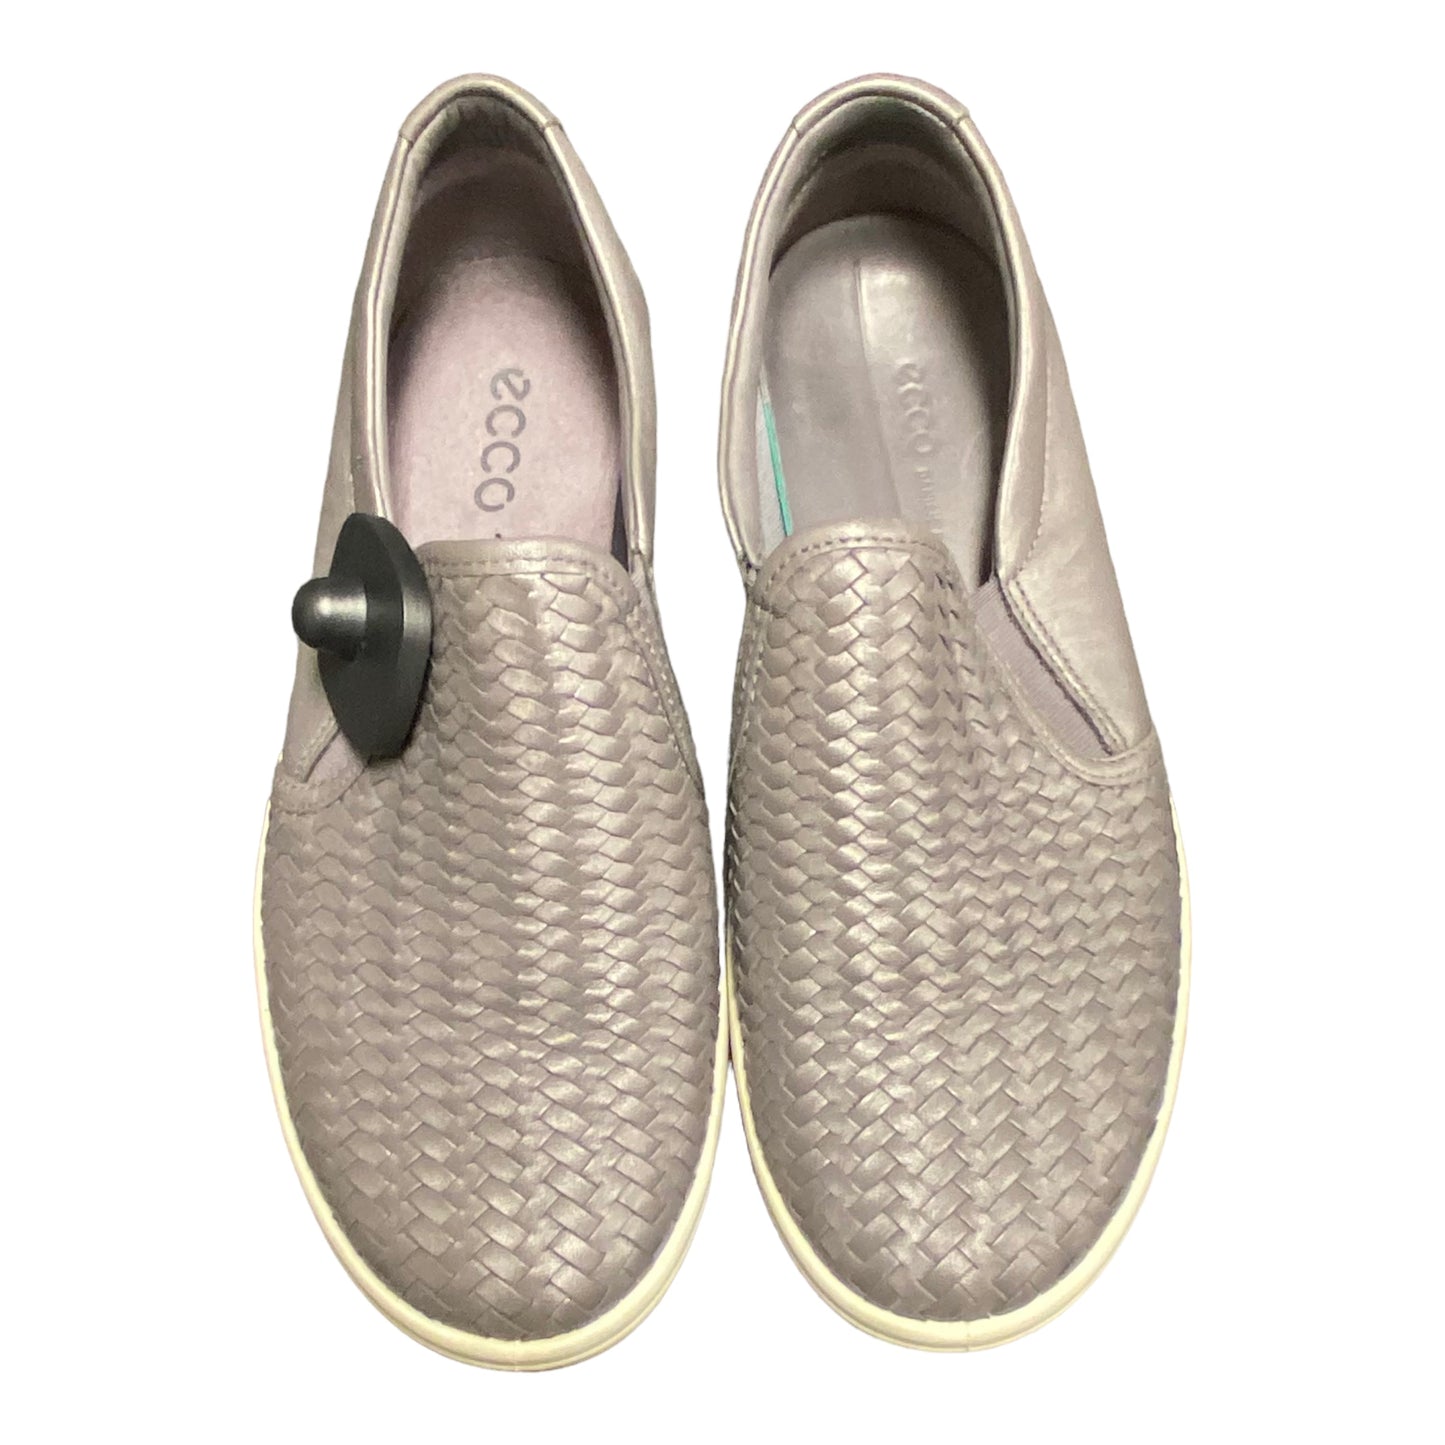 Grey Shoes Flats Ecco, Size 8.5